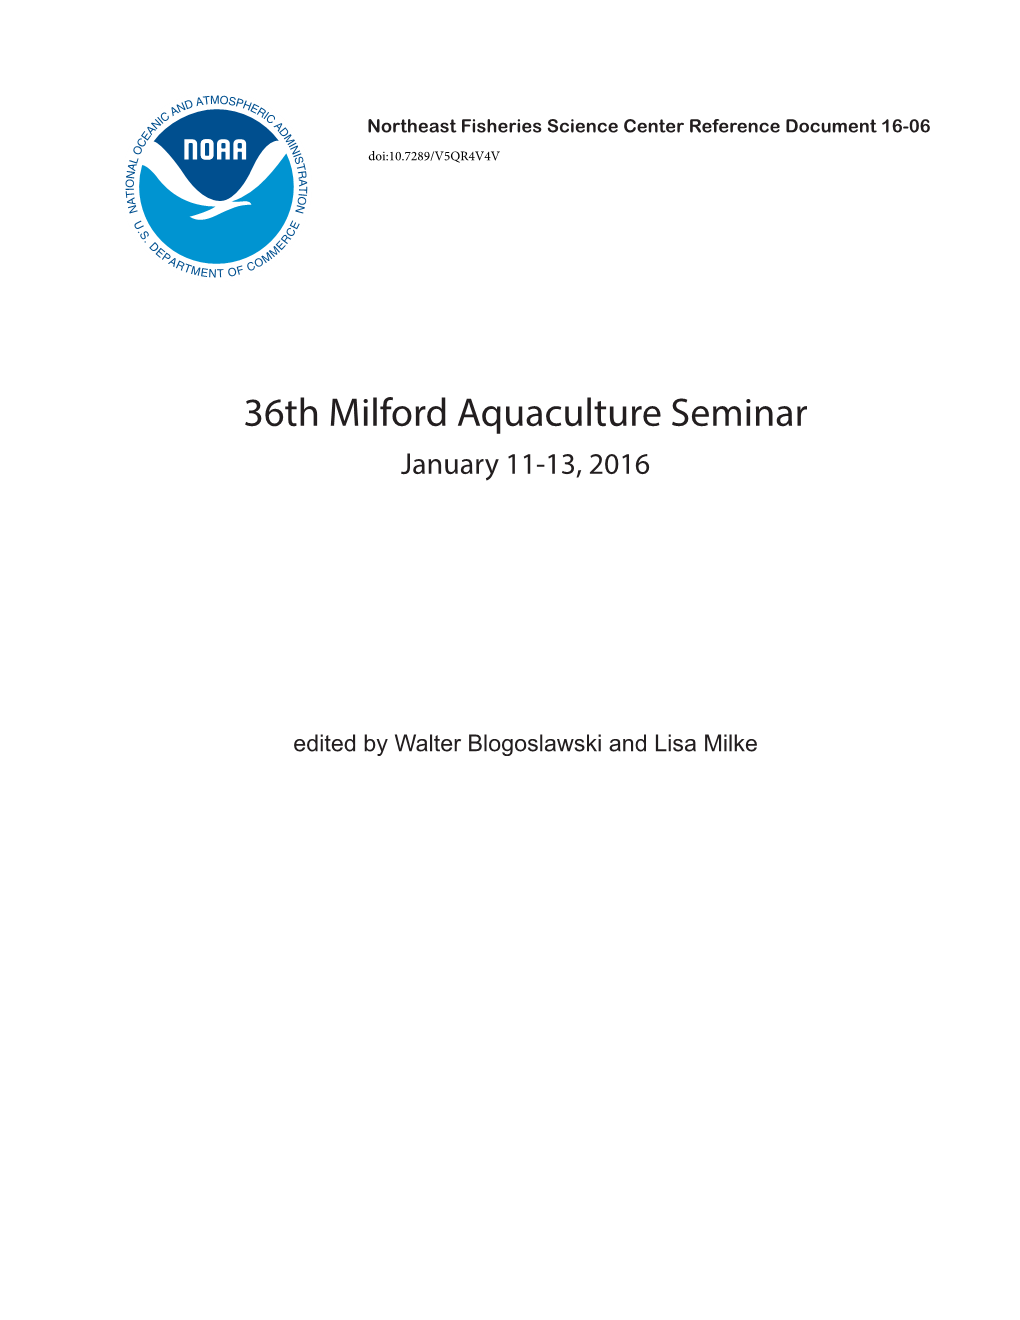 36Th Milford Aquaculture Seminar January 11-13, 2016